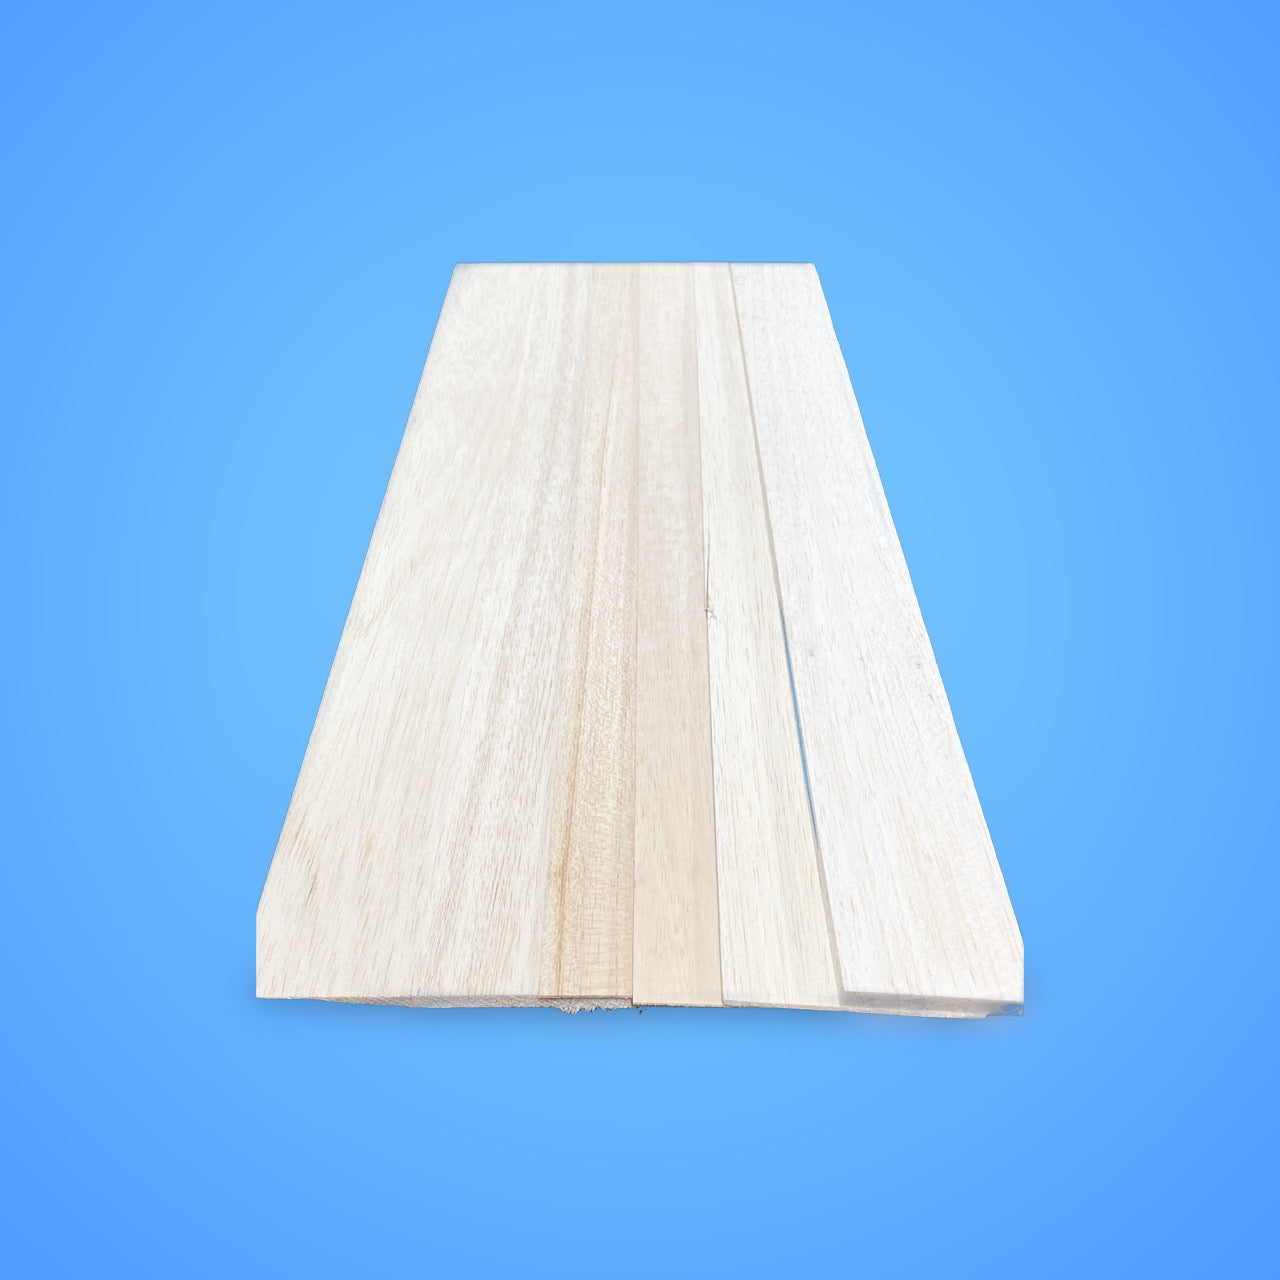 3/16 x 3 x 48 Aero Light Balsa Wood Sheets